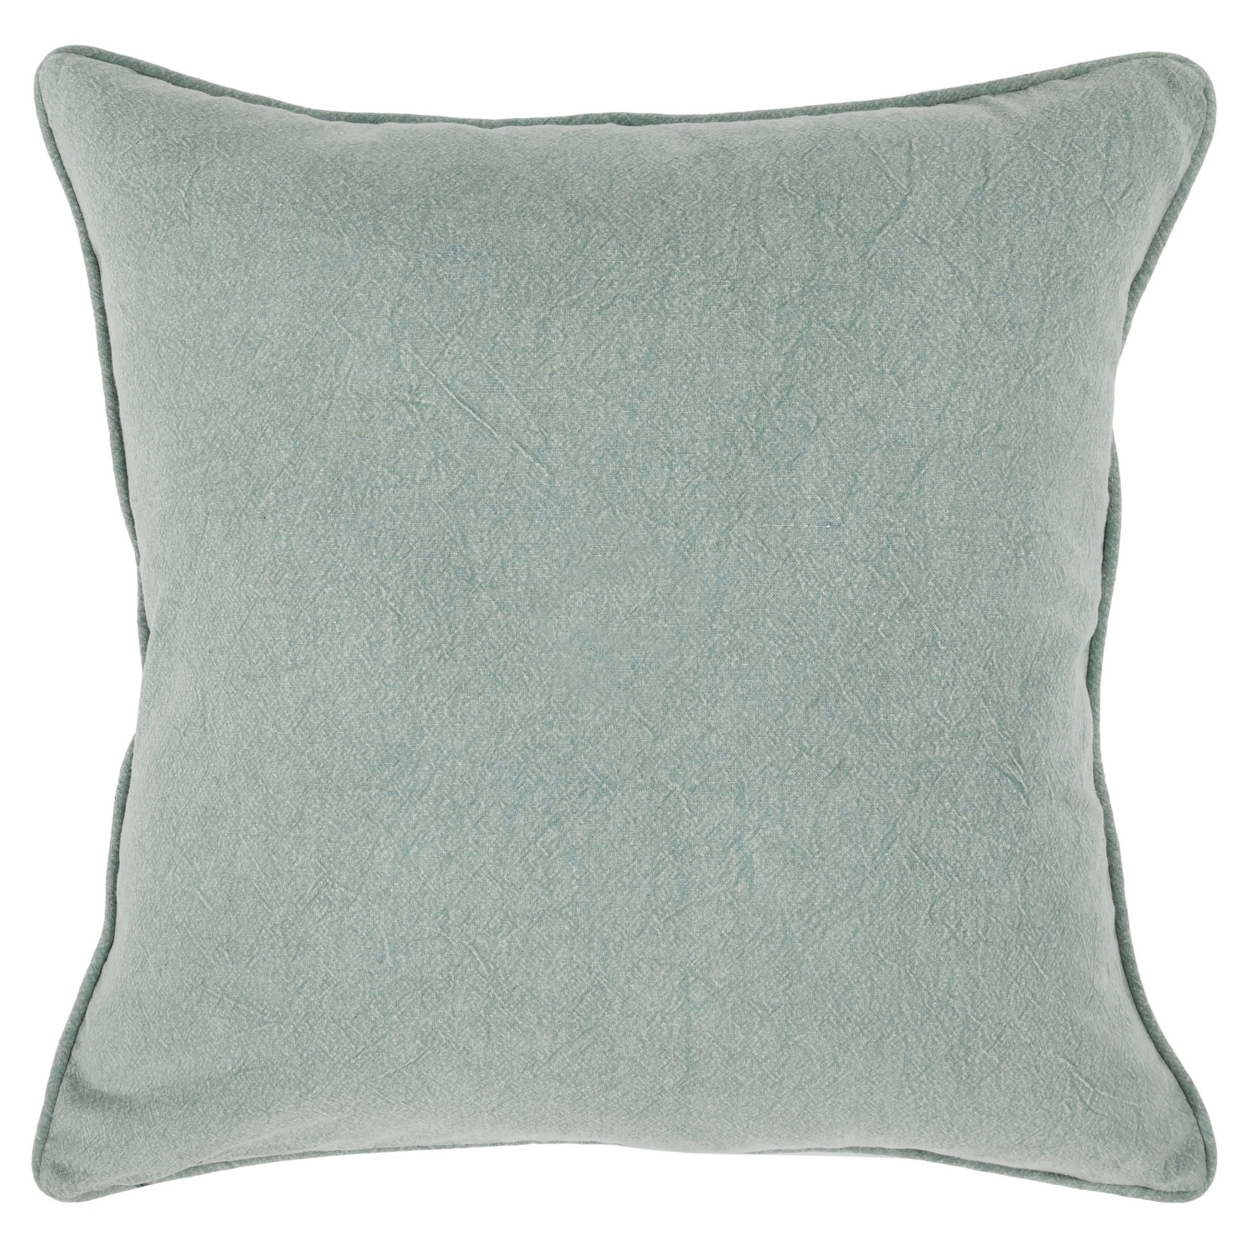 Giana 22 X 22 Square Fabric Accent Throw Pillow, Piped Edges, Light Blue- Saltoro Sherpi